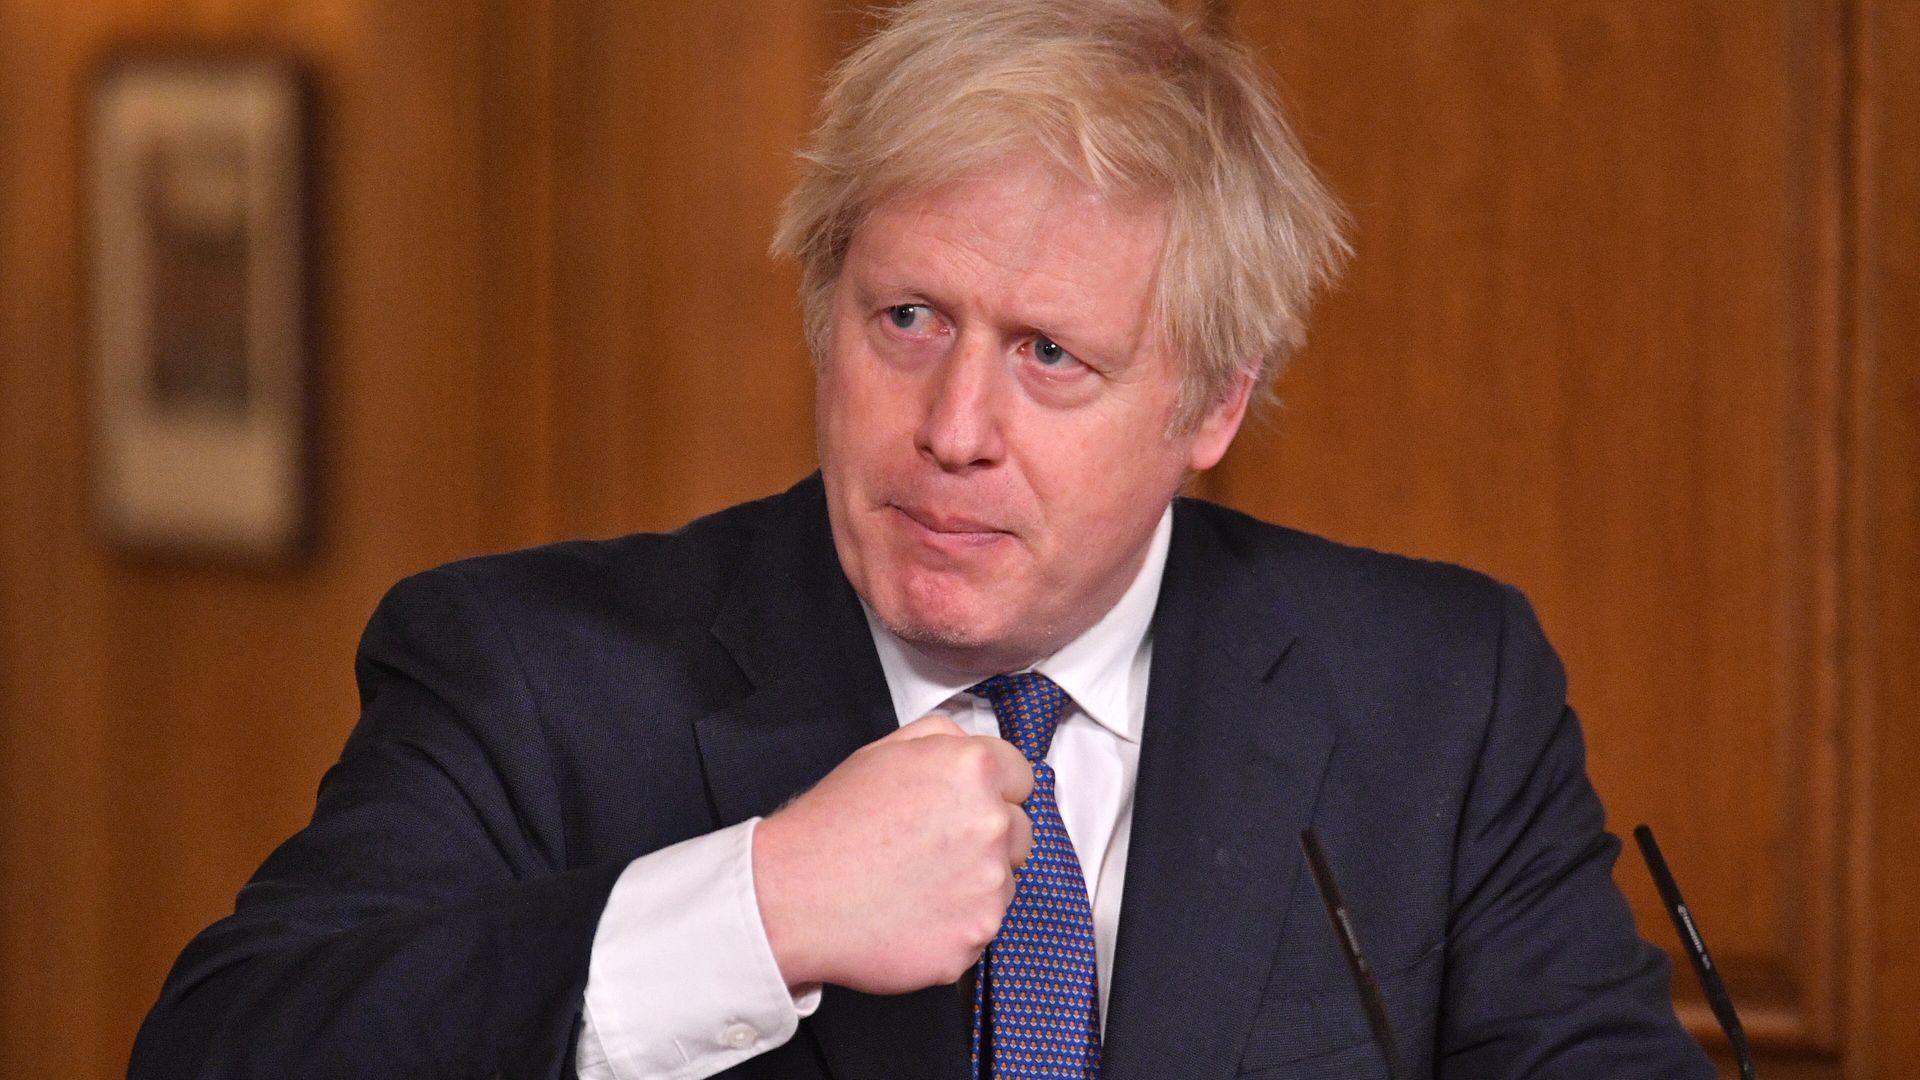 Prime Minister Boris Johnson during a media briefing on coronavirus - Credit: PA